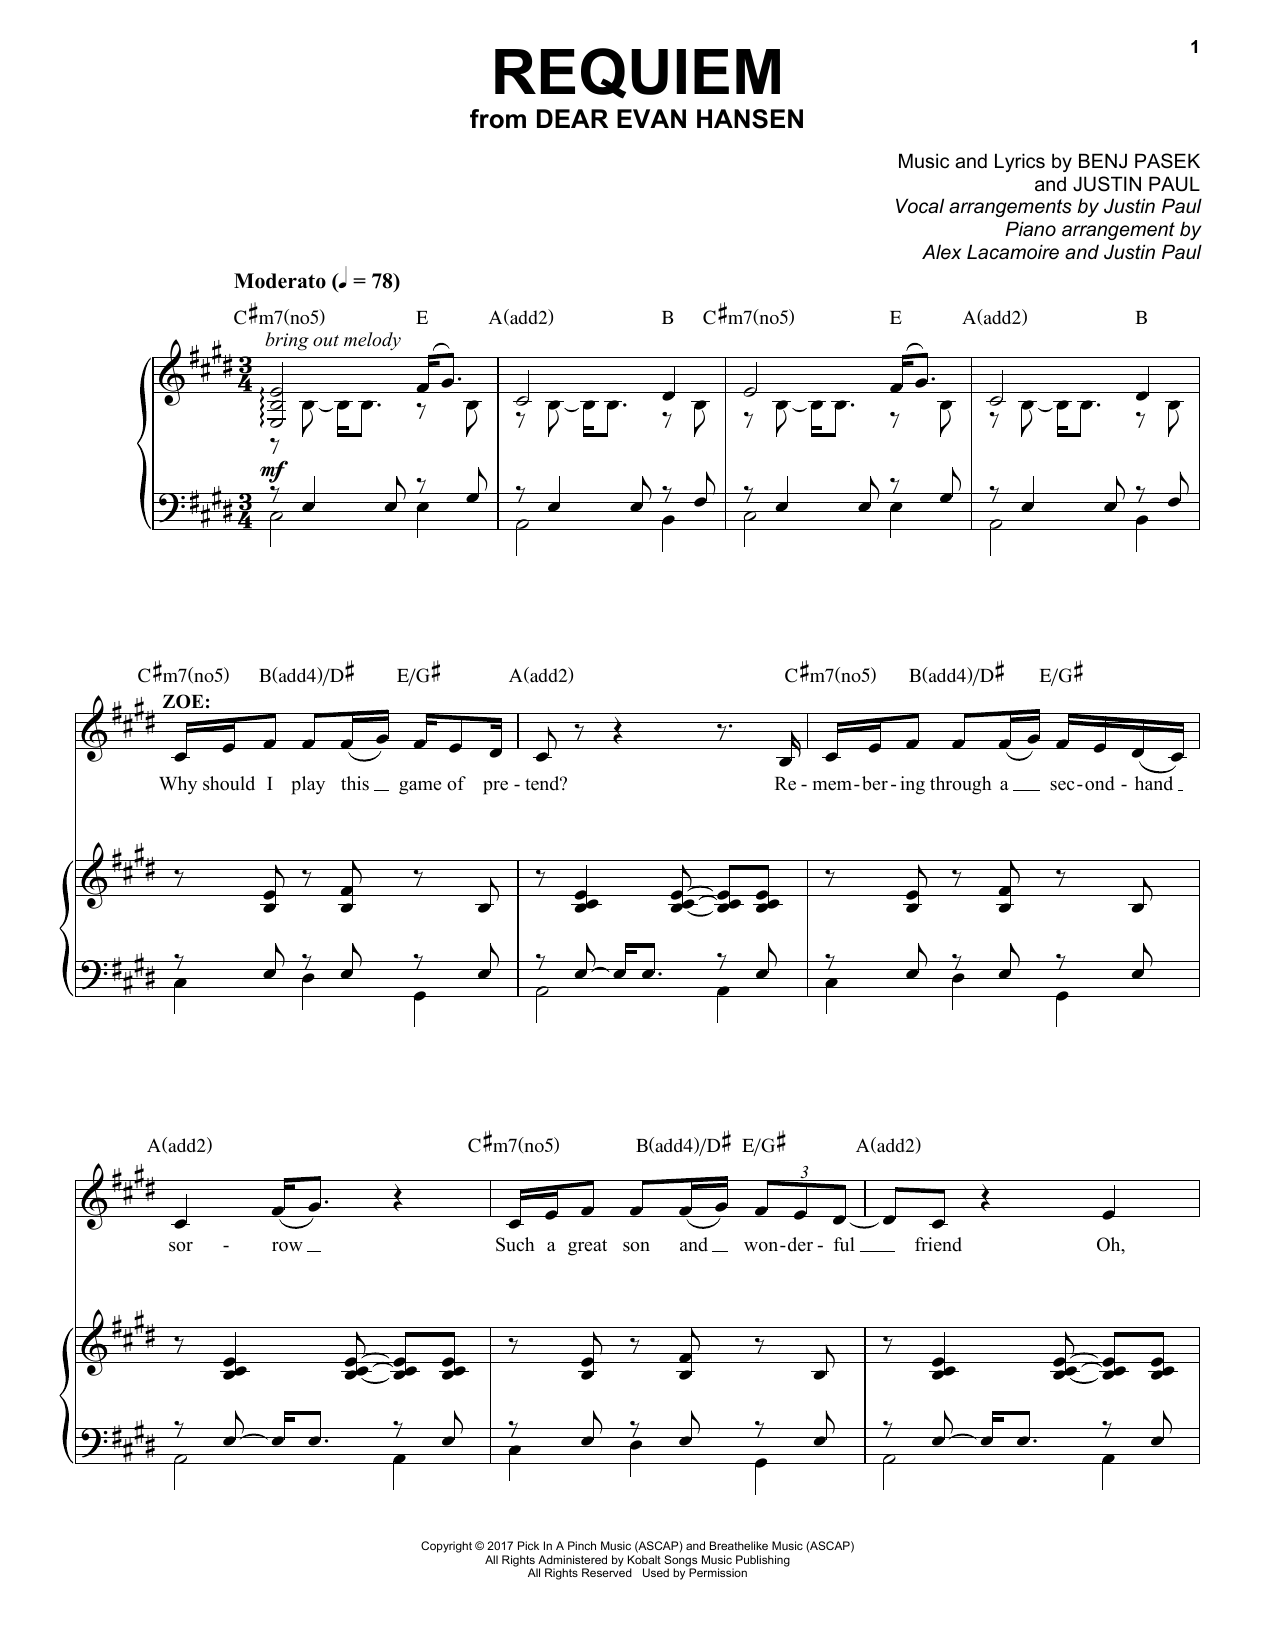 Download Pasek & Paul Requiem (from Dear Evan Hansen) Sheet Music and learn how to play Ukulele PDF digital score in minutes